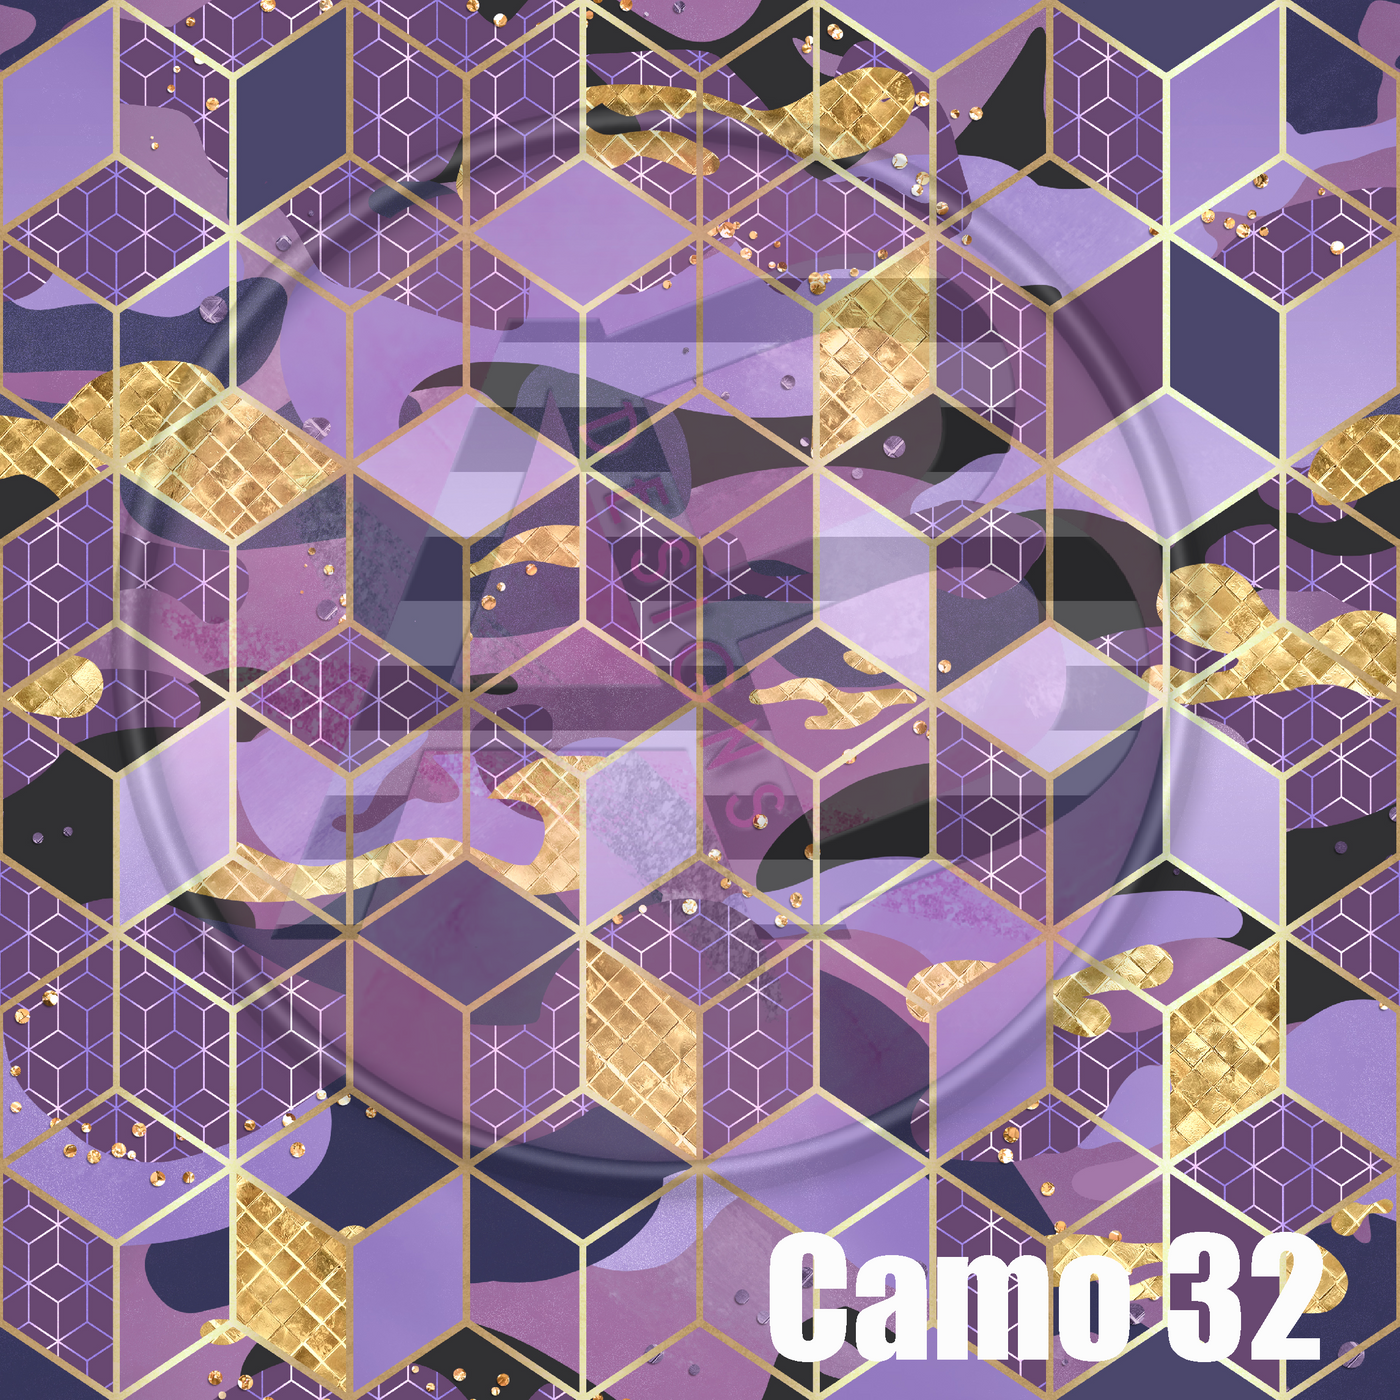 Adhesive Patterned Vinyl - Camo 32